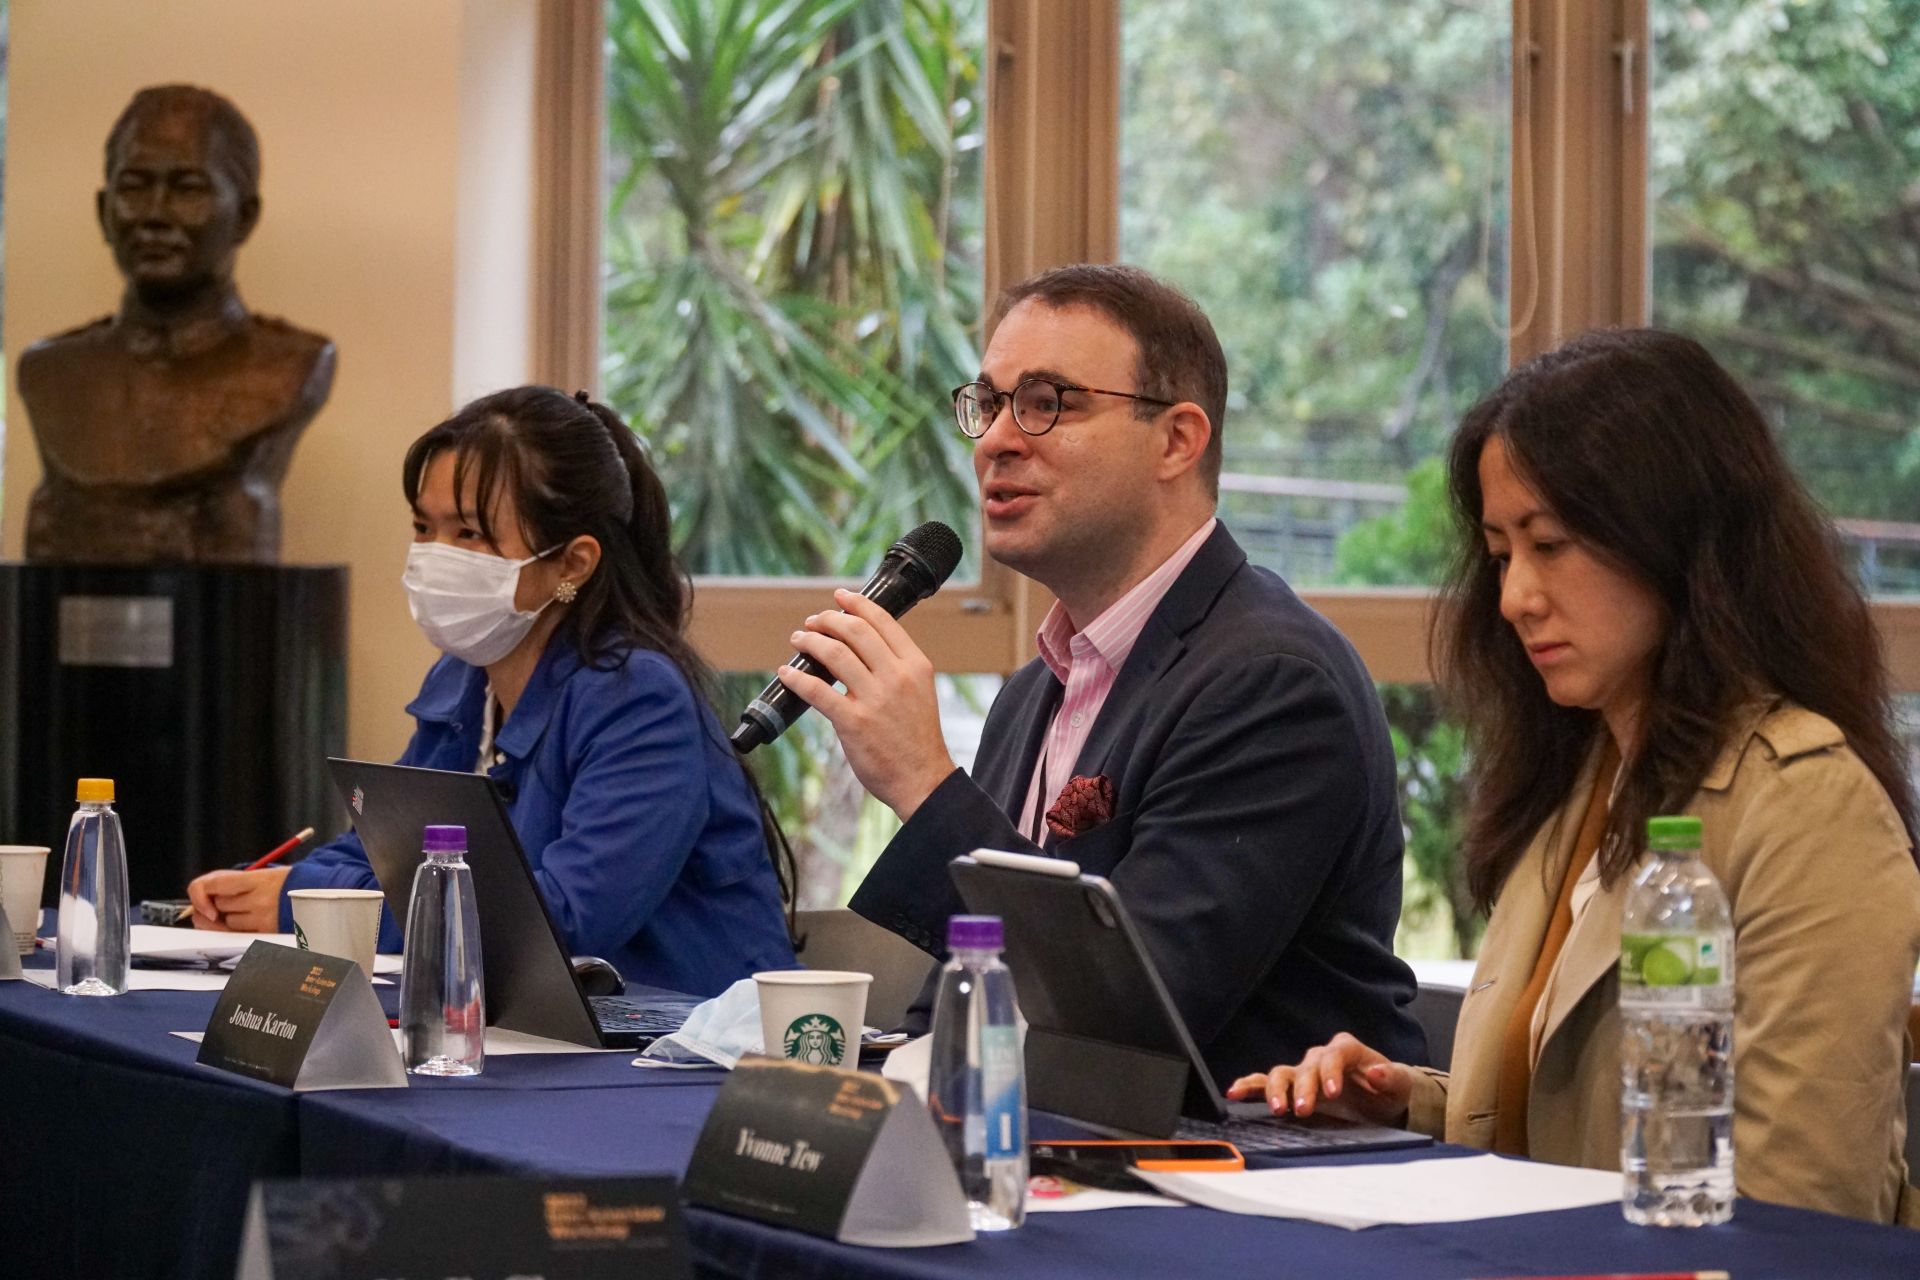 2022 Inter-Asian Law Workshop 亞際法研討會